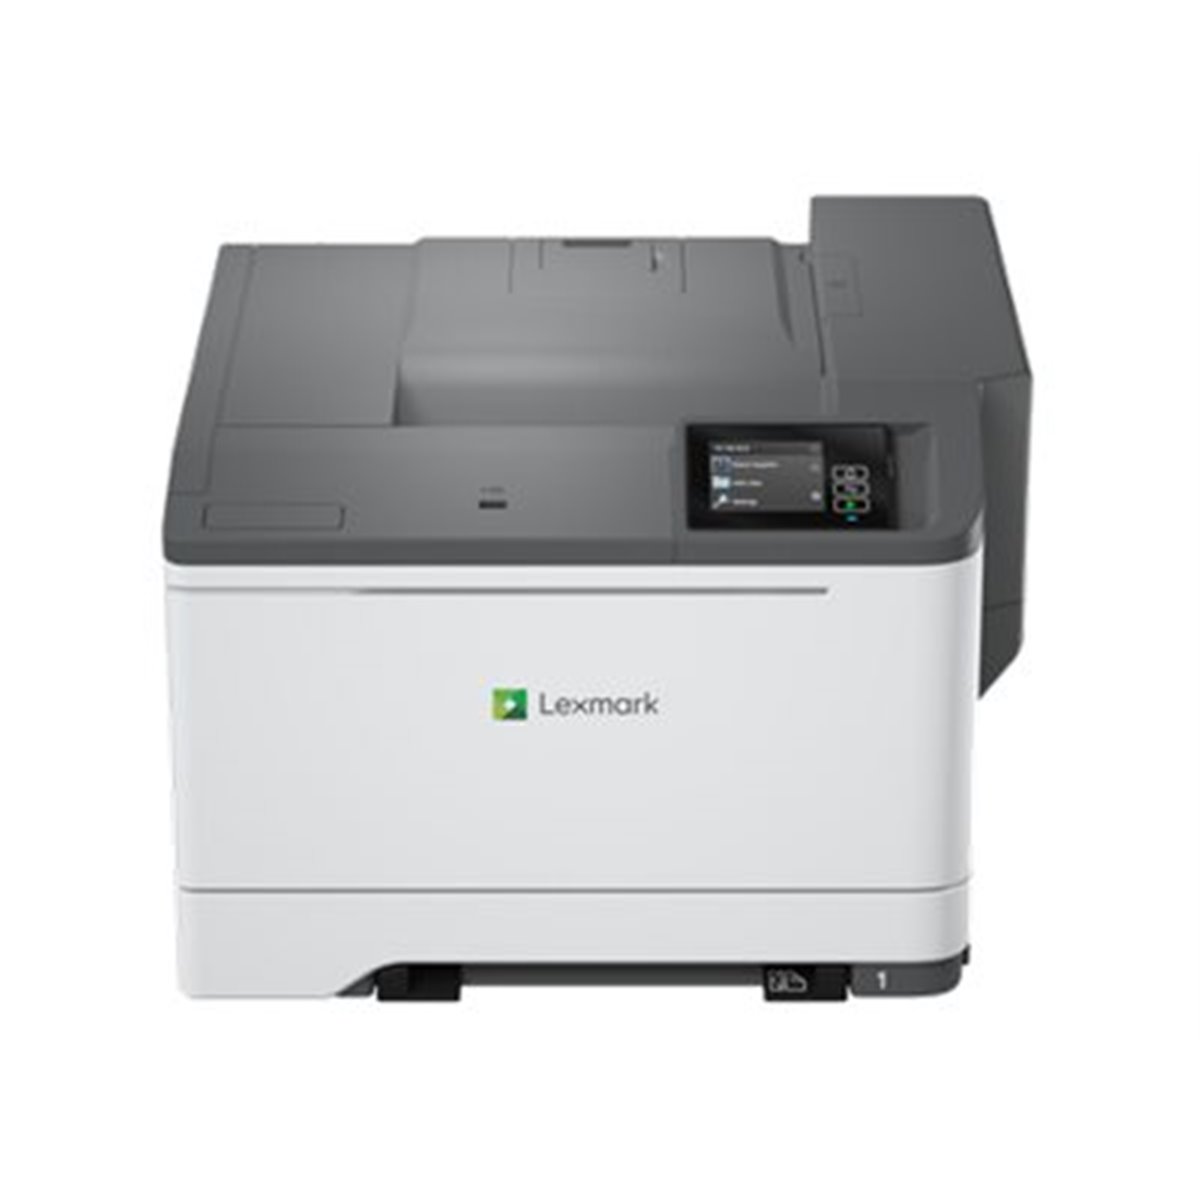 Lexmark Color Singlefunction Printer HV EMEA 33ppm - Printer - Colored